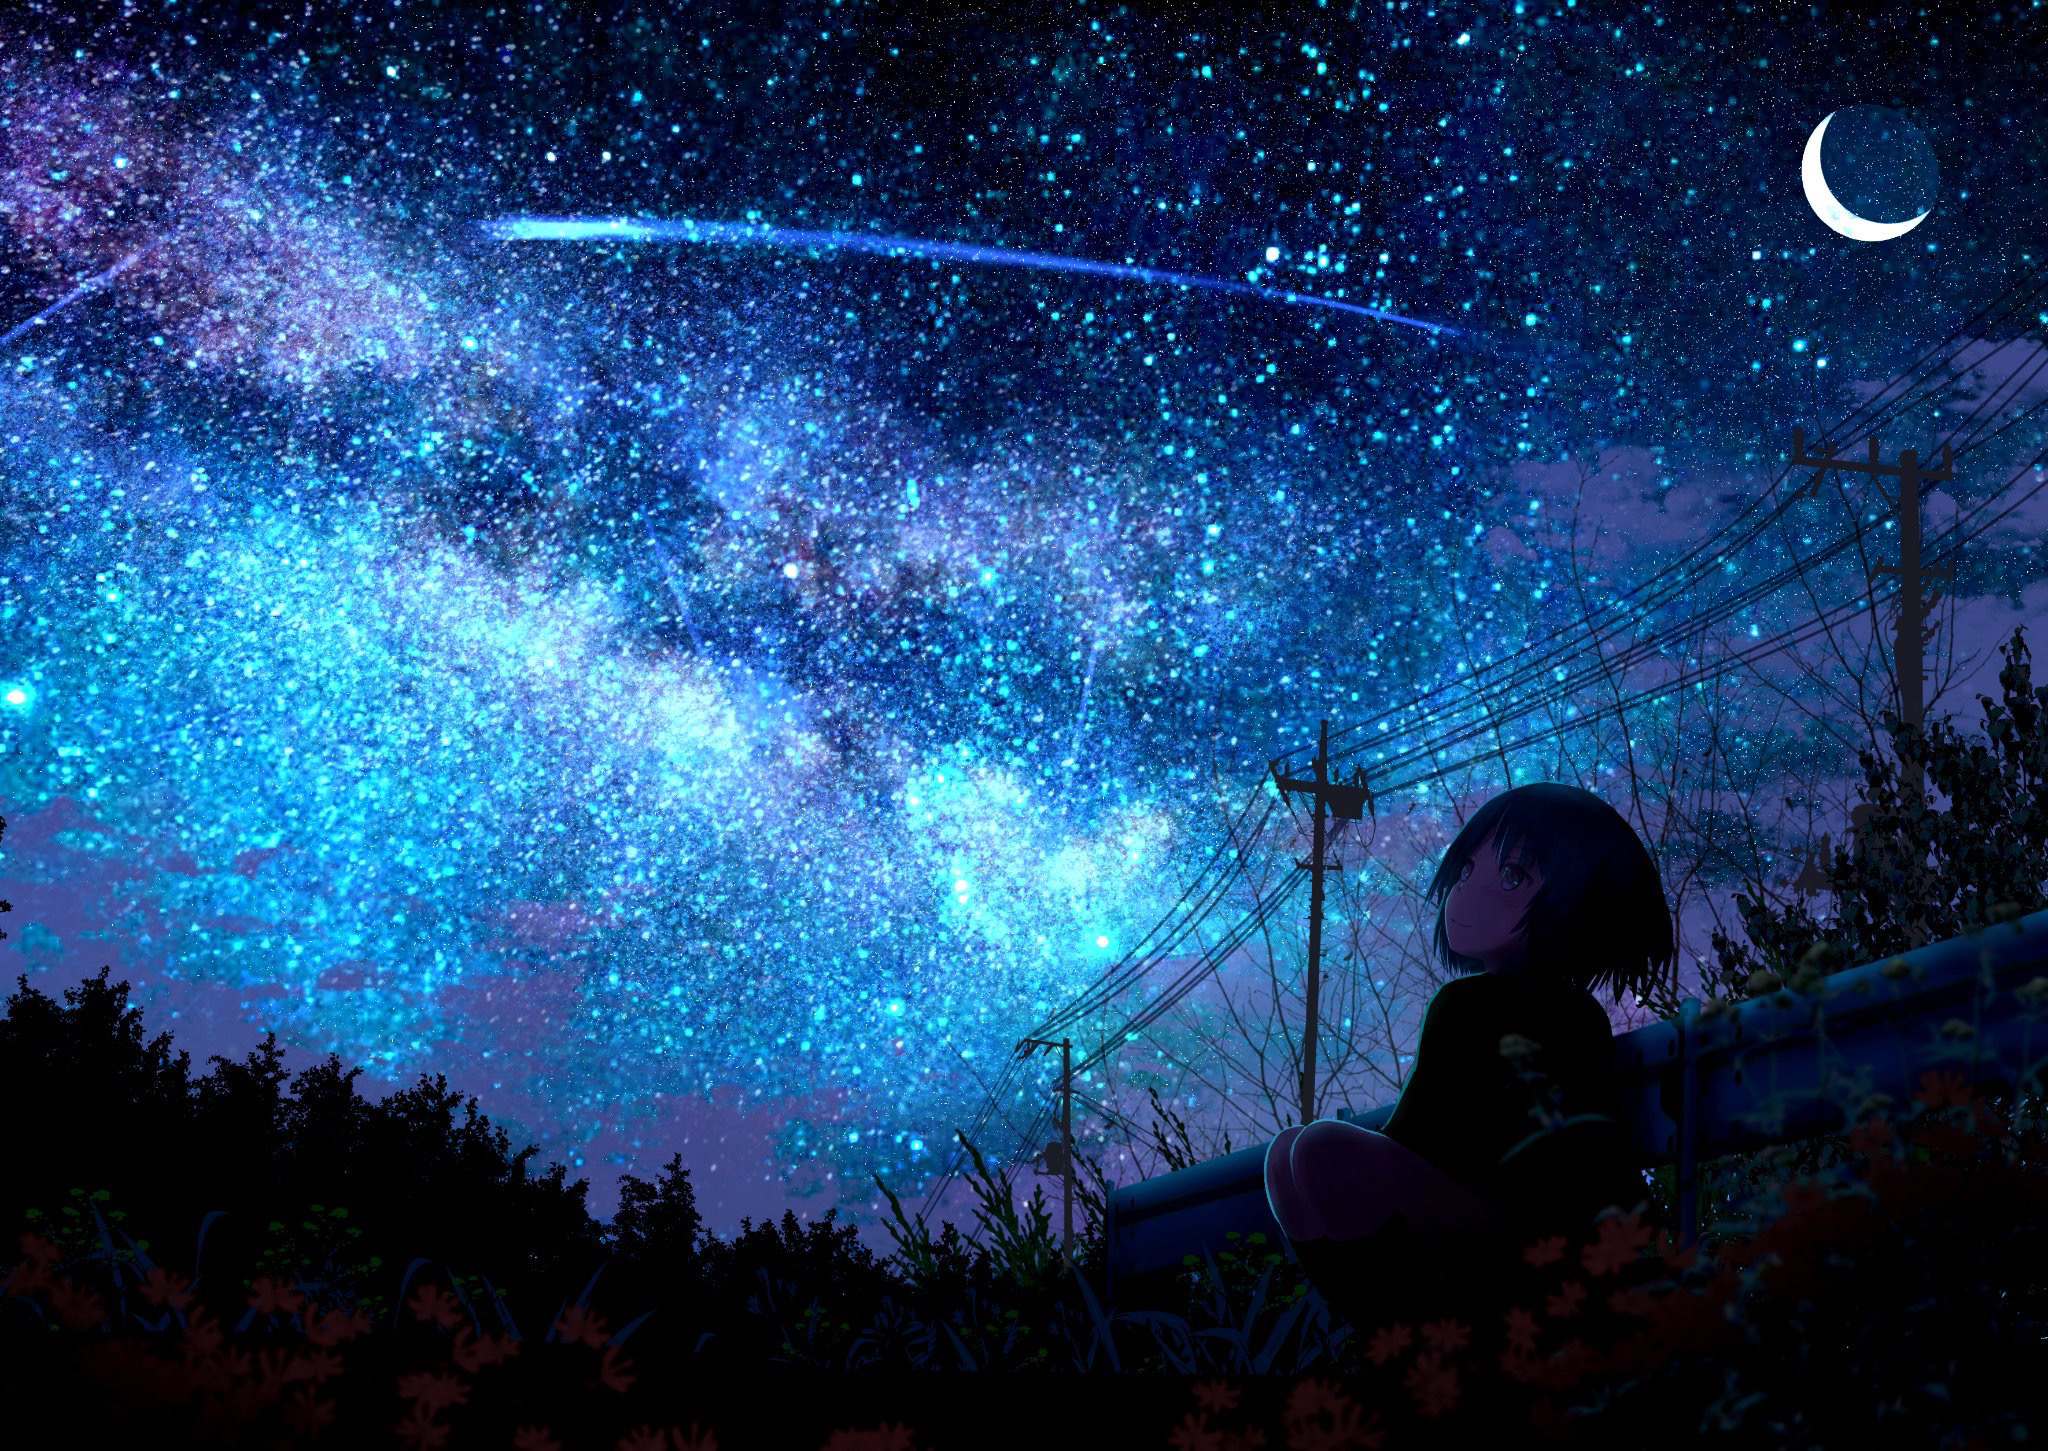 Anime Night Sky Wallpaper | 1500x1000 | ID:51713 - WallpaperVortex.com